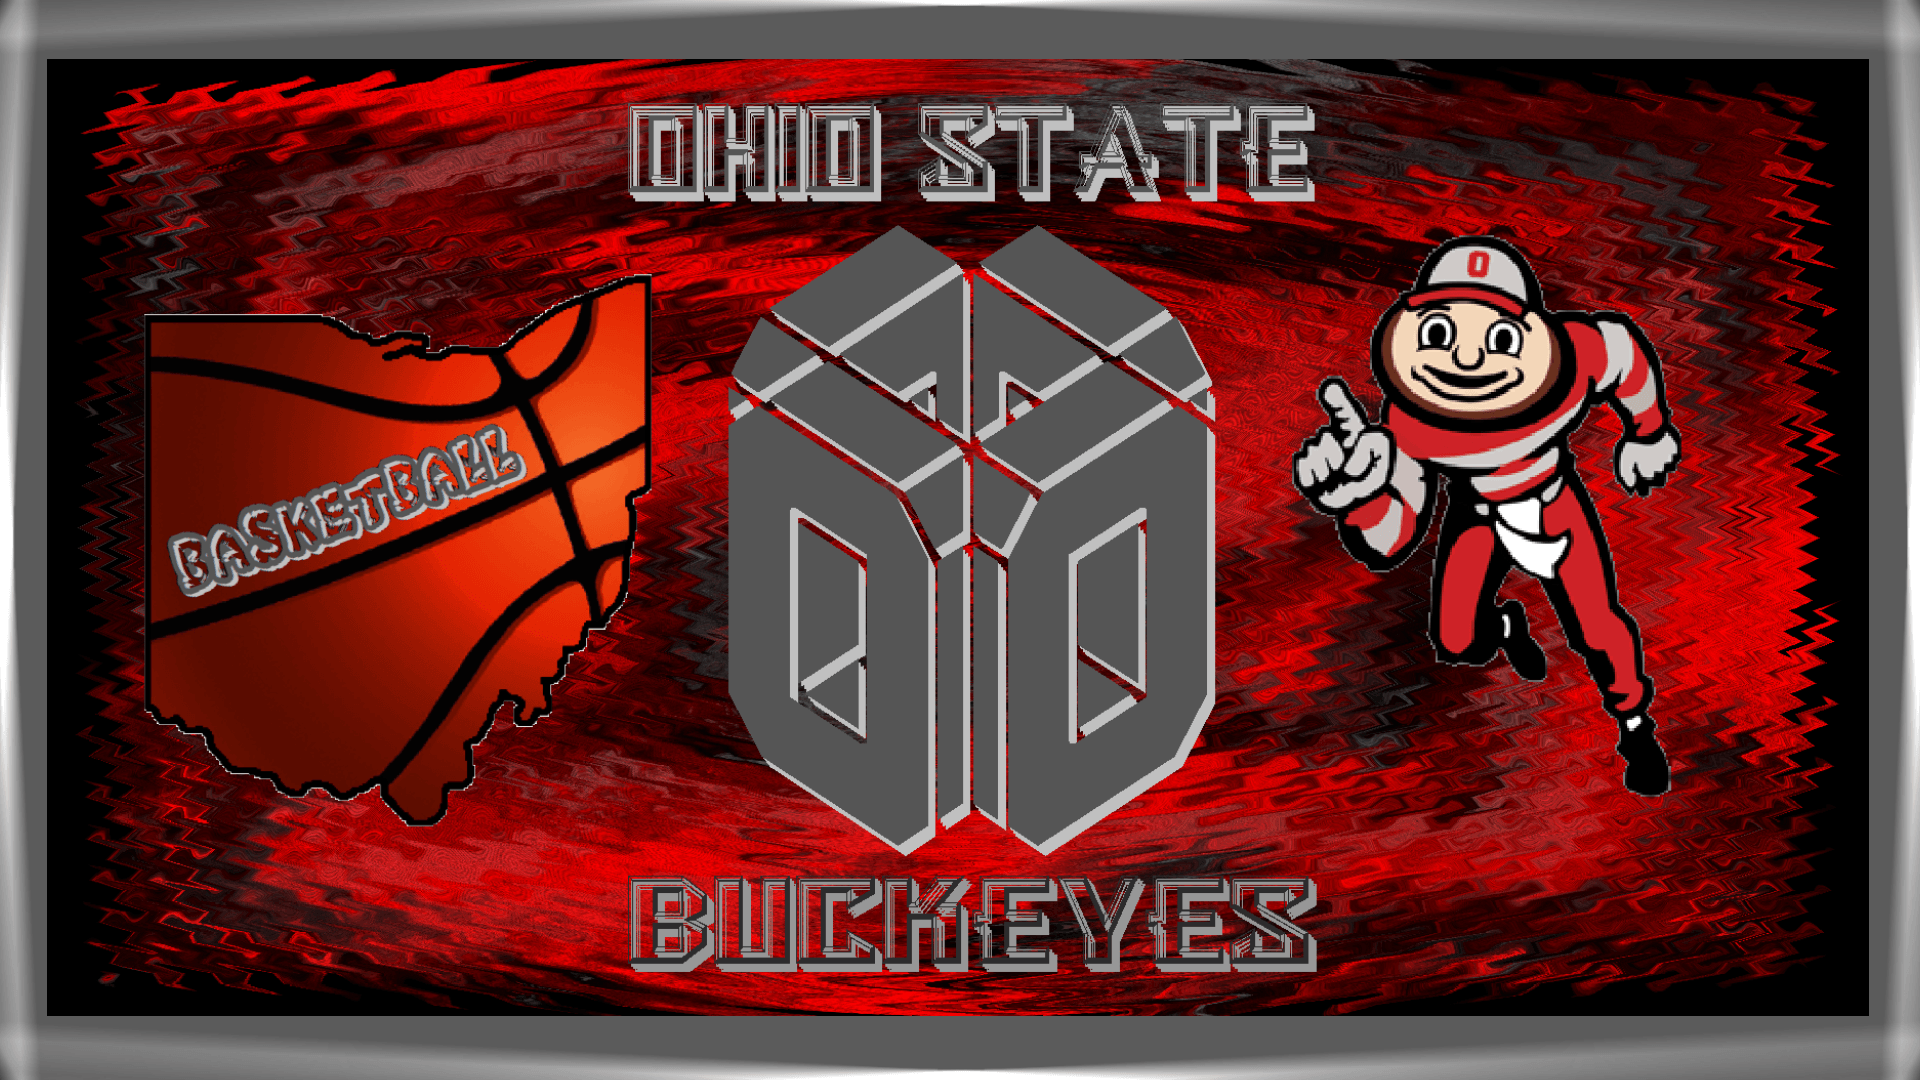 Ohio State Buckeyes Wallpaper. OHIO STATE BUCKEYES BASKETBALL